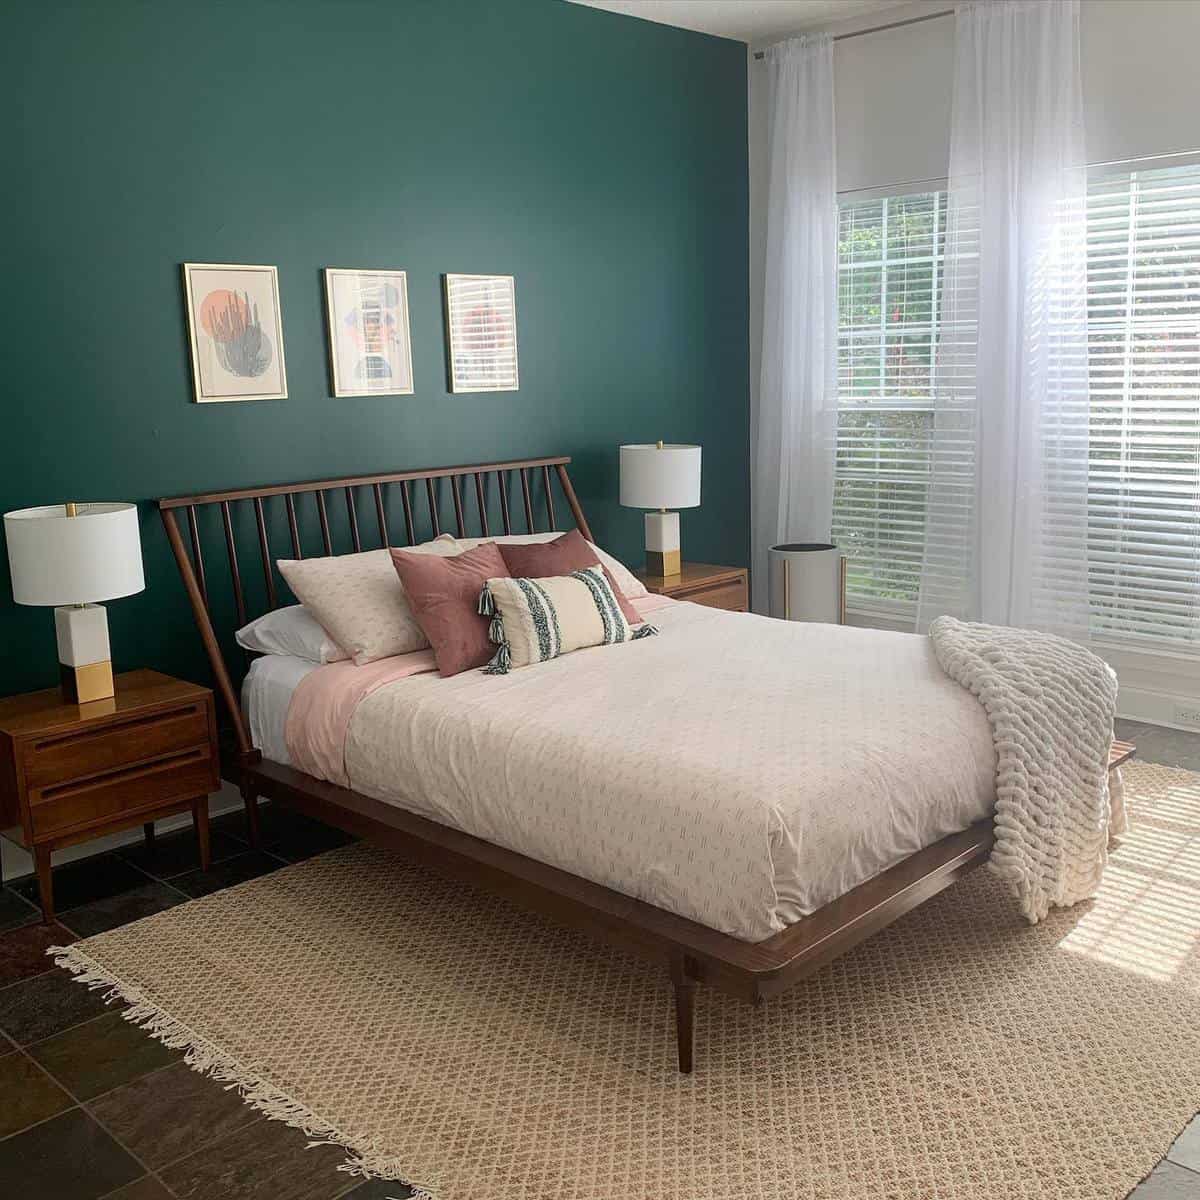 Classic Green Bedroom Ideas -ervargo